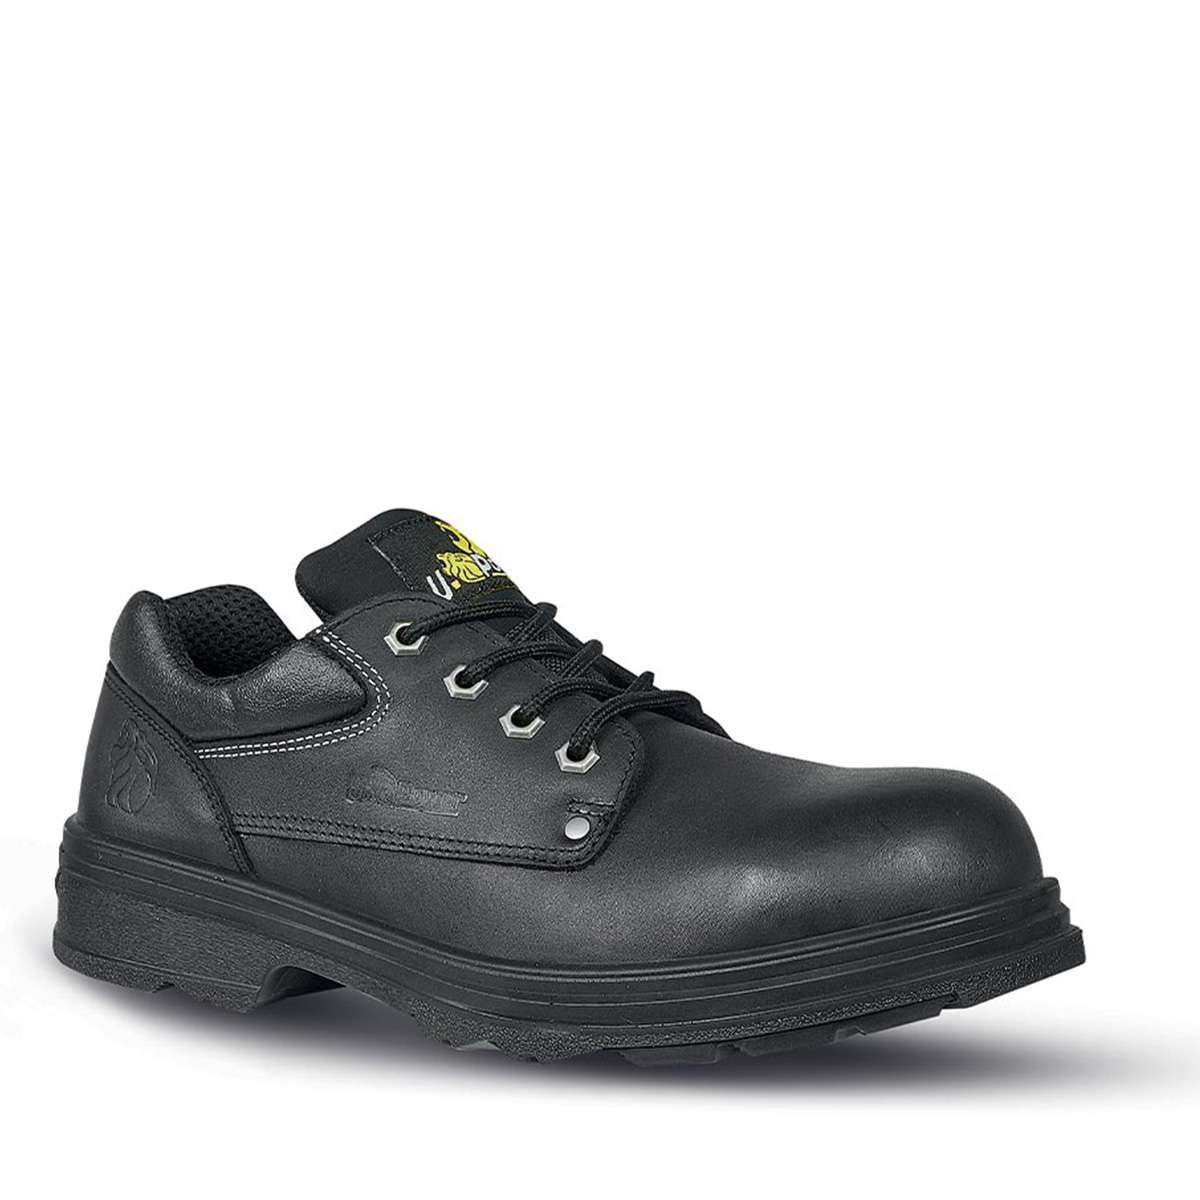 Work footwear and U-Power SRC - Footwear Safety MUSTANG Clothing S3